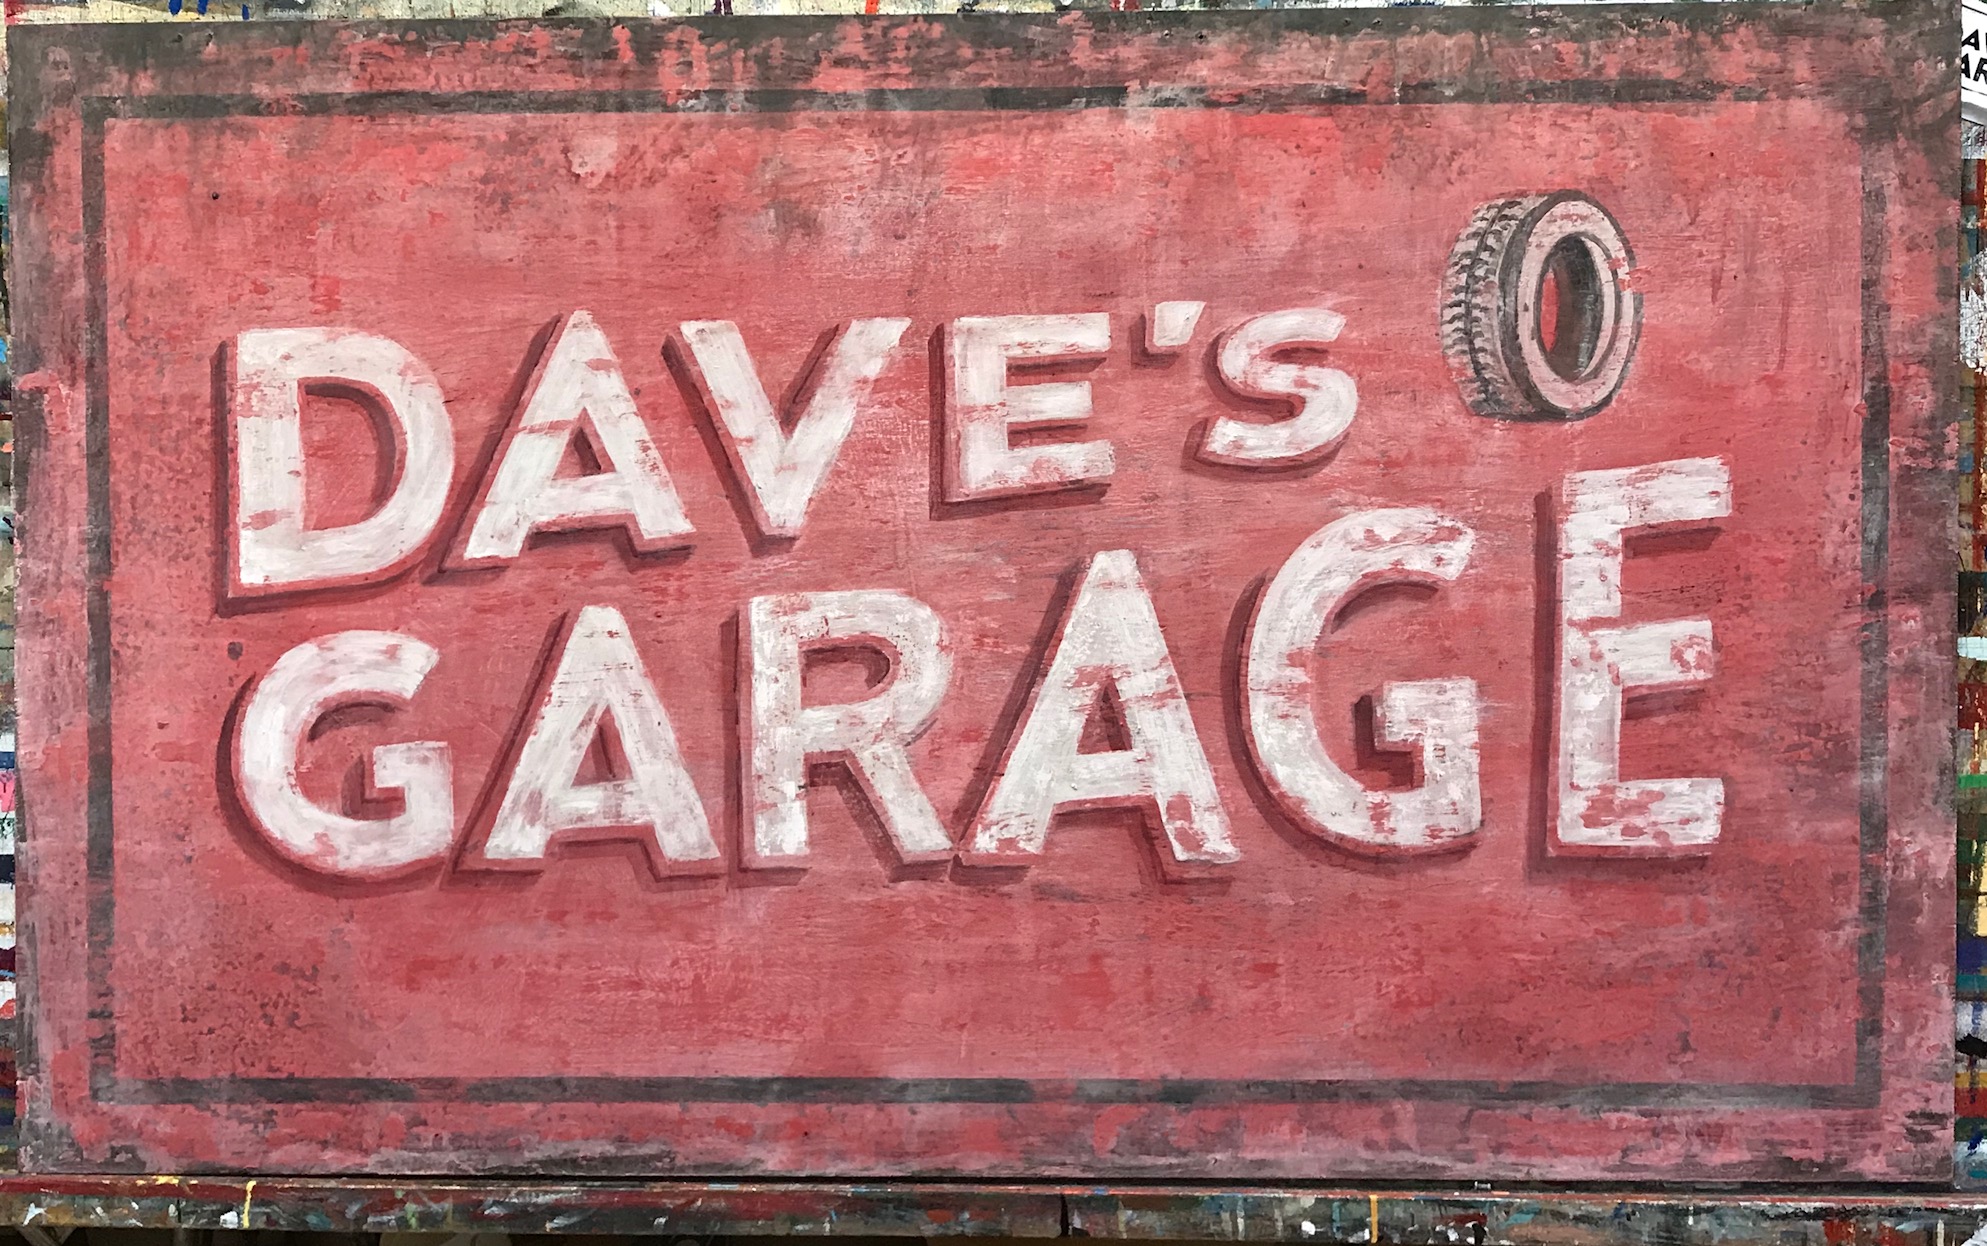 Dave's Garage, aged sign